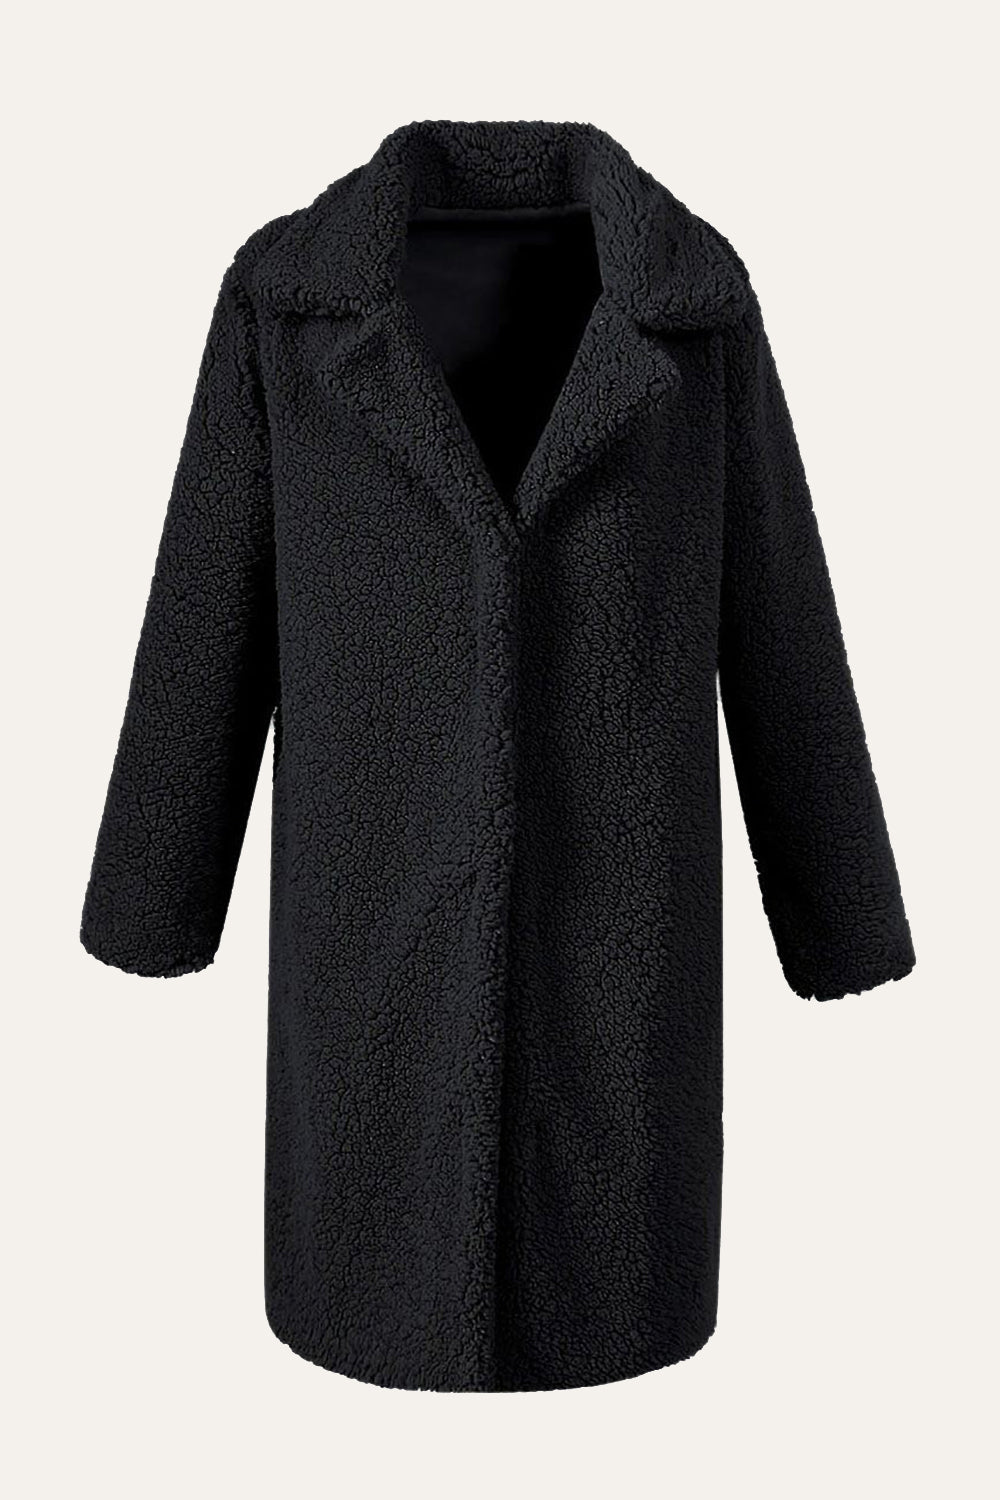 Black Notched Lapel Long Faux Fur Shearling Coat